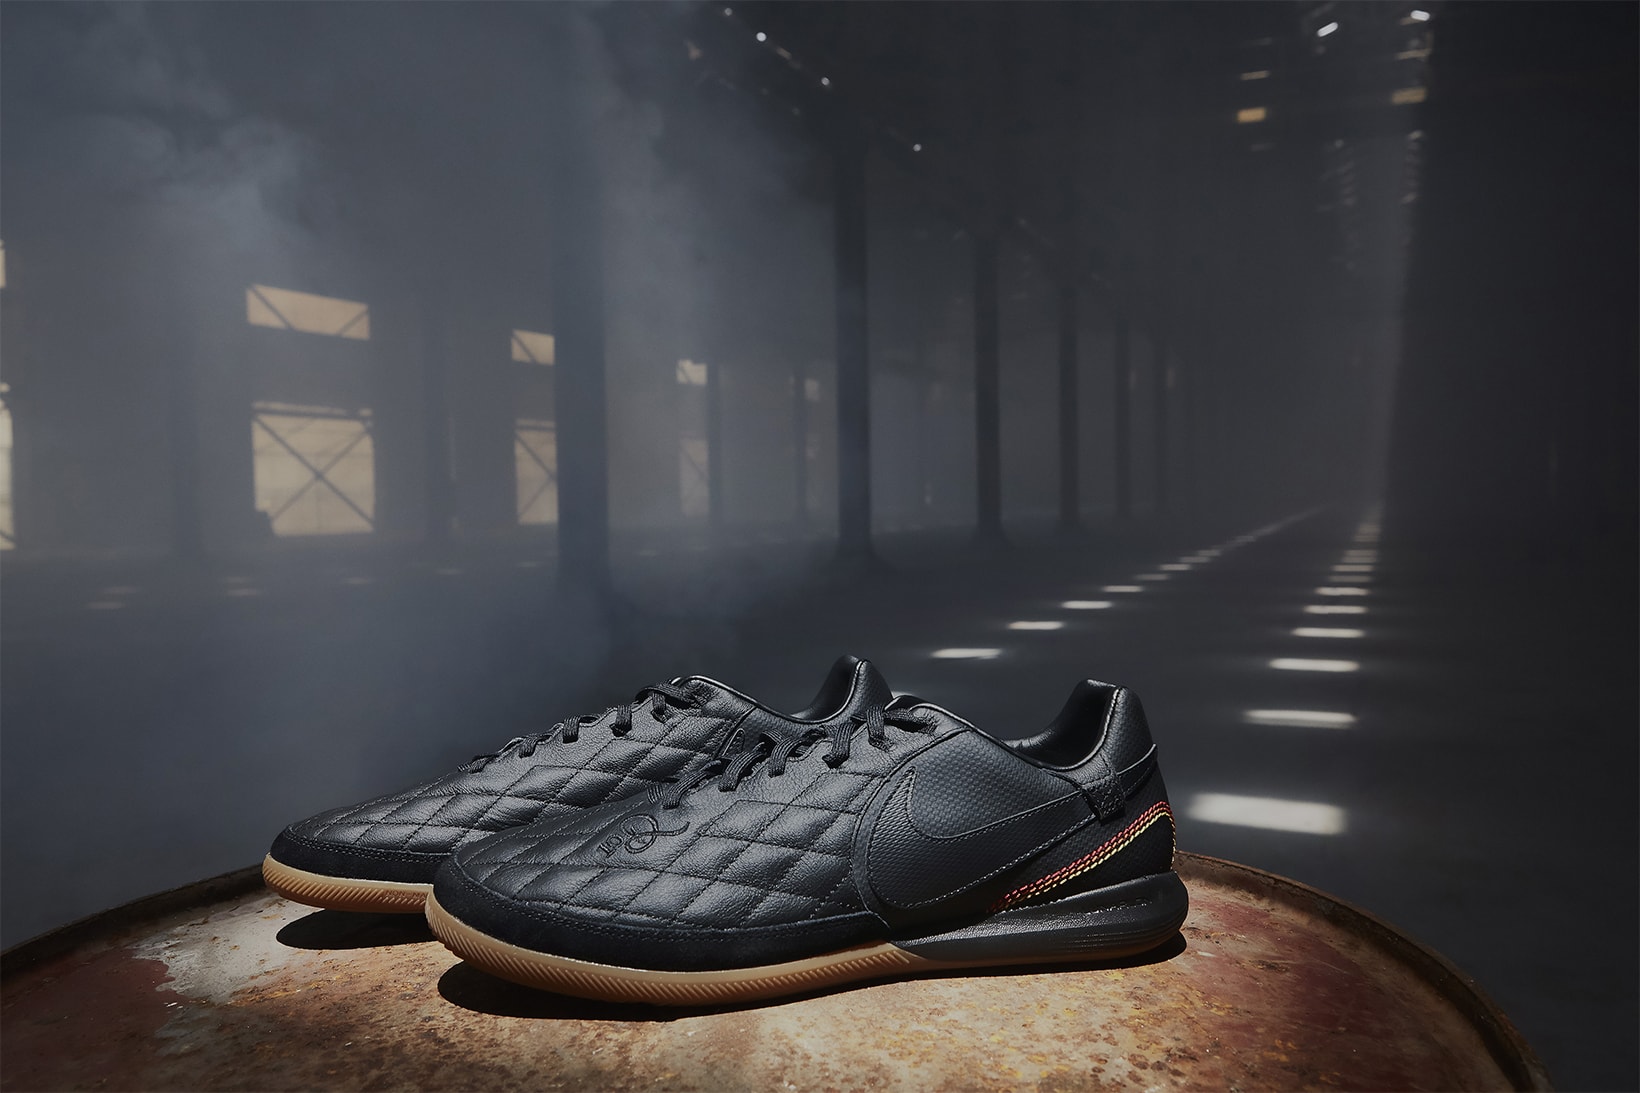 Ronaldinho Nike 10R City Collection LegendX 2018 January 25 Release Date Info Sneakers Shoes Footwear Black Navy Blue